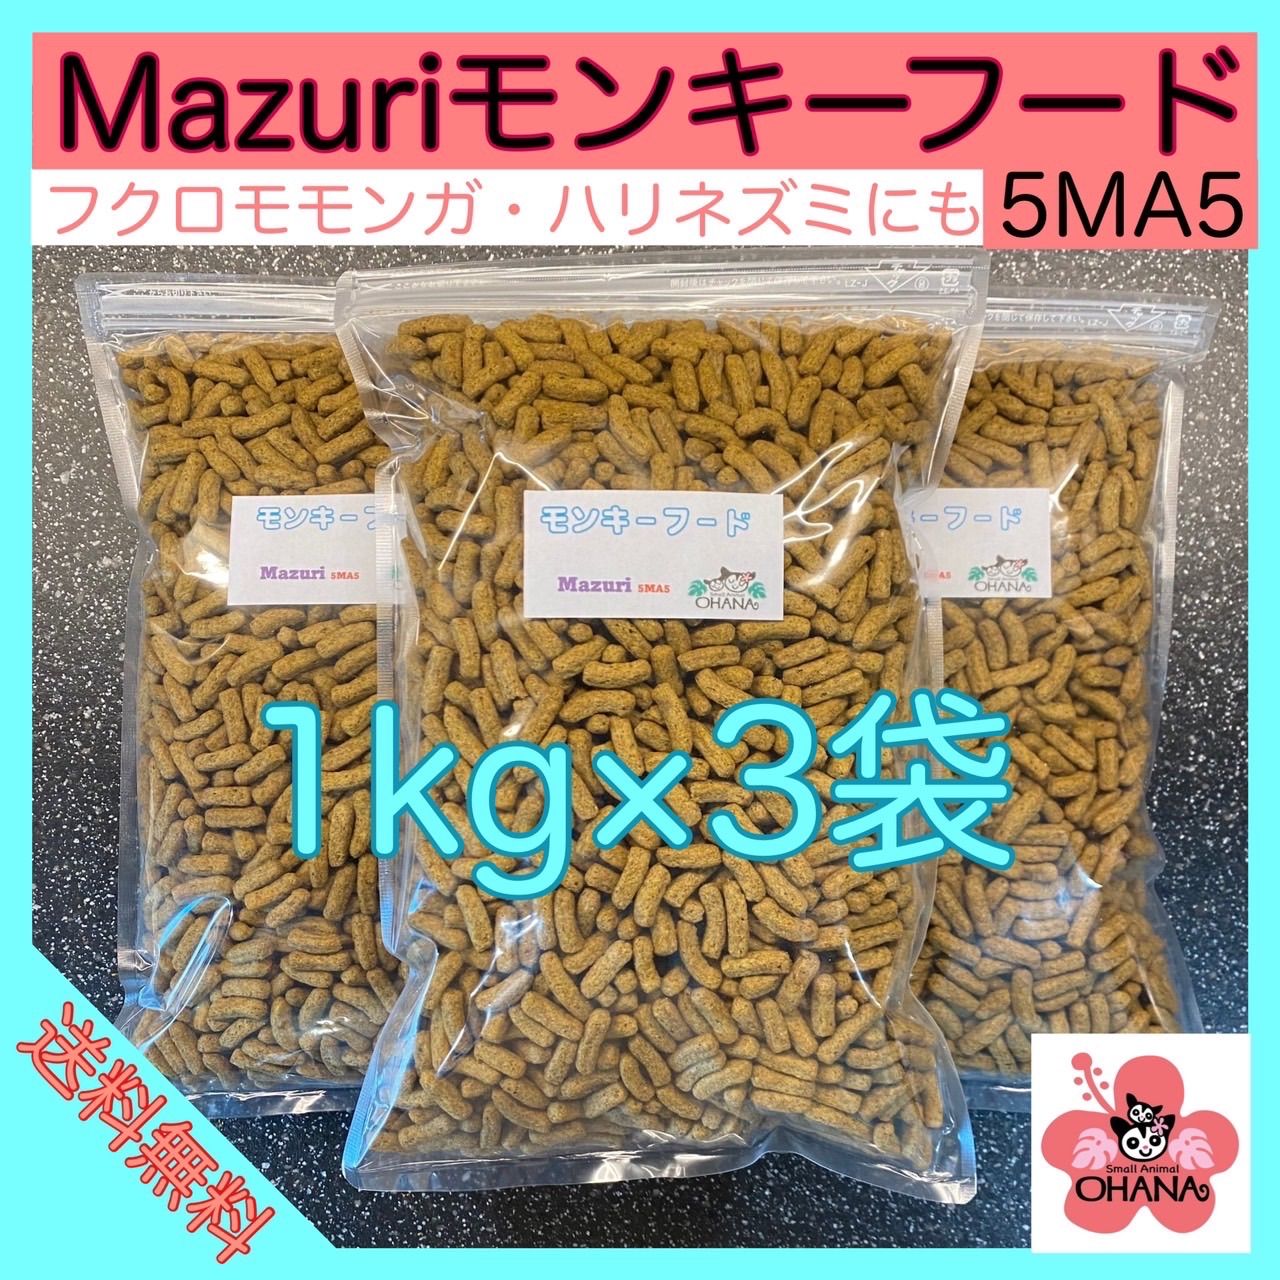 mazuri モンキーフード 2kg 5MA5 ハリネズミ フクロモモンガ